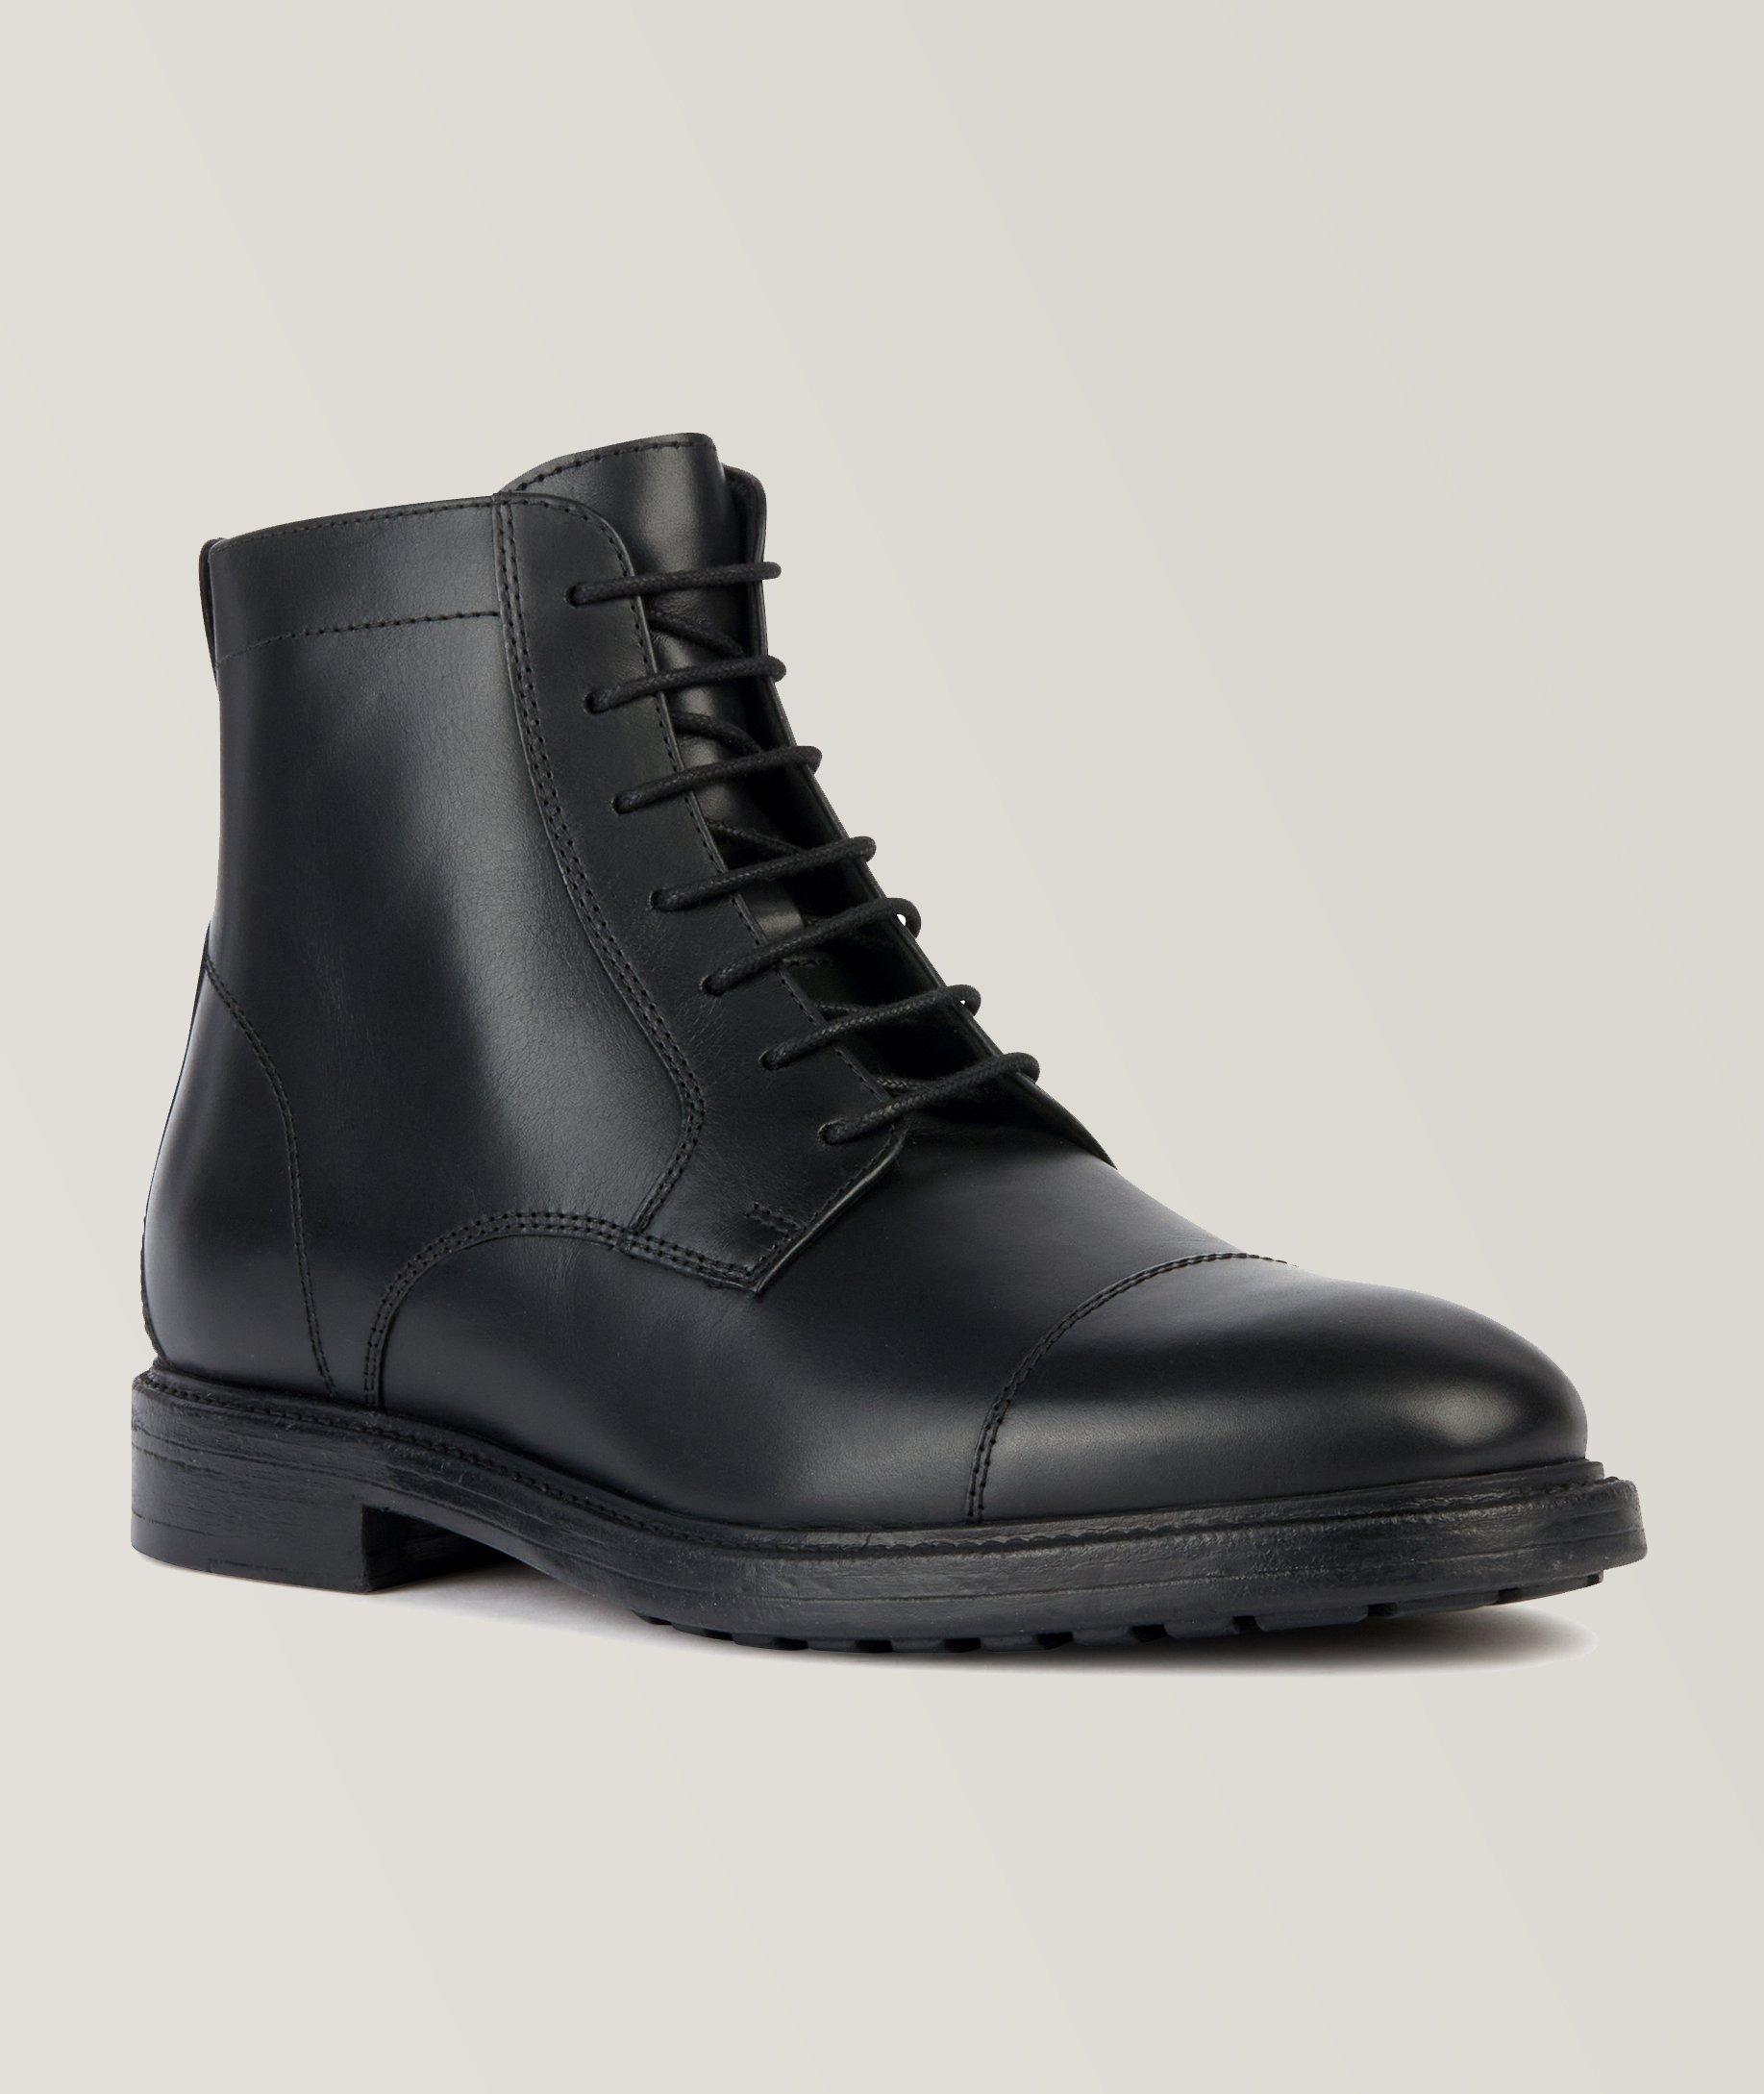 Tiberio Leather Hiking Boots image 0